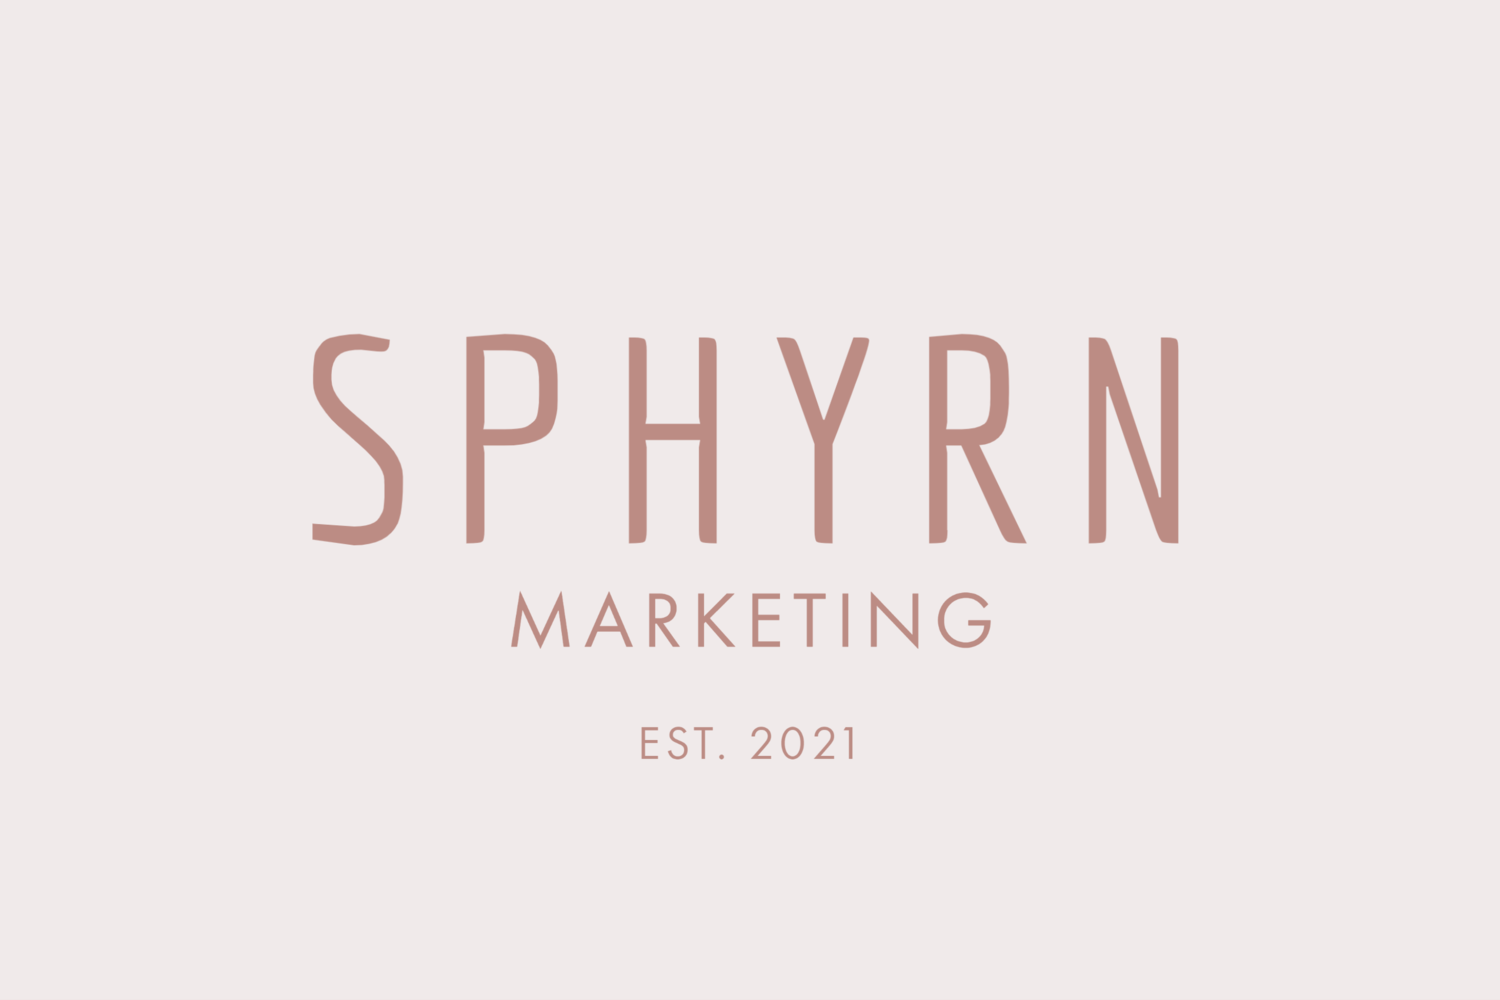 Sphyrn Marketing 